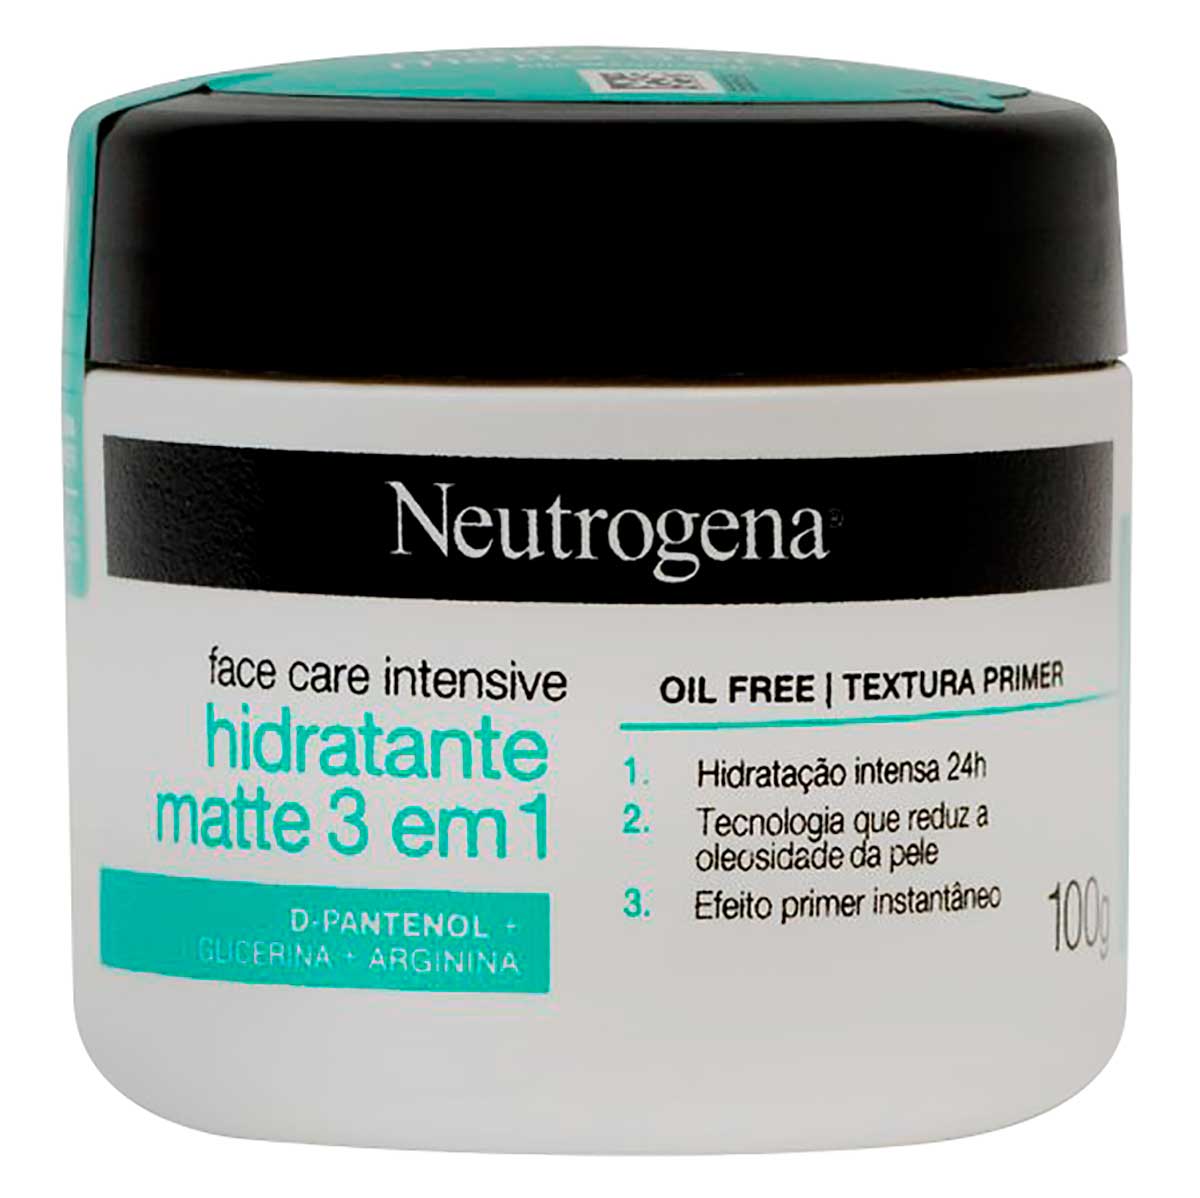 hidratante-facial-matte-3-em1-neutrogena-face-care-intensive-100g-1.jpg